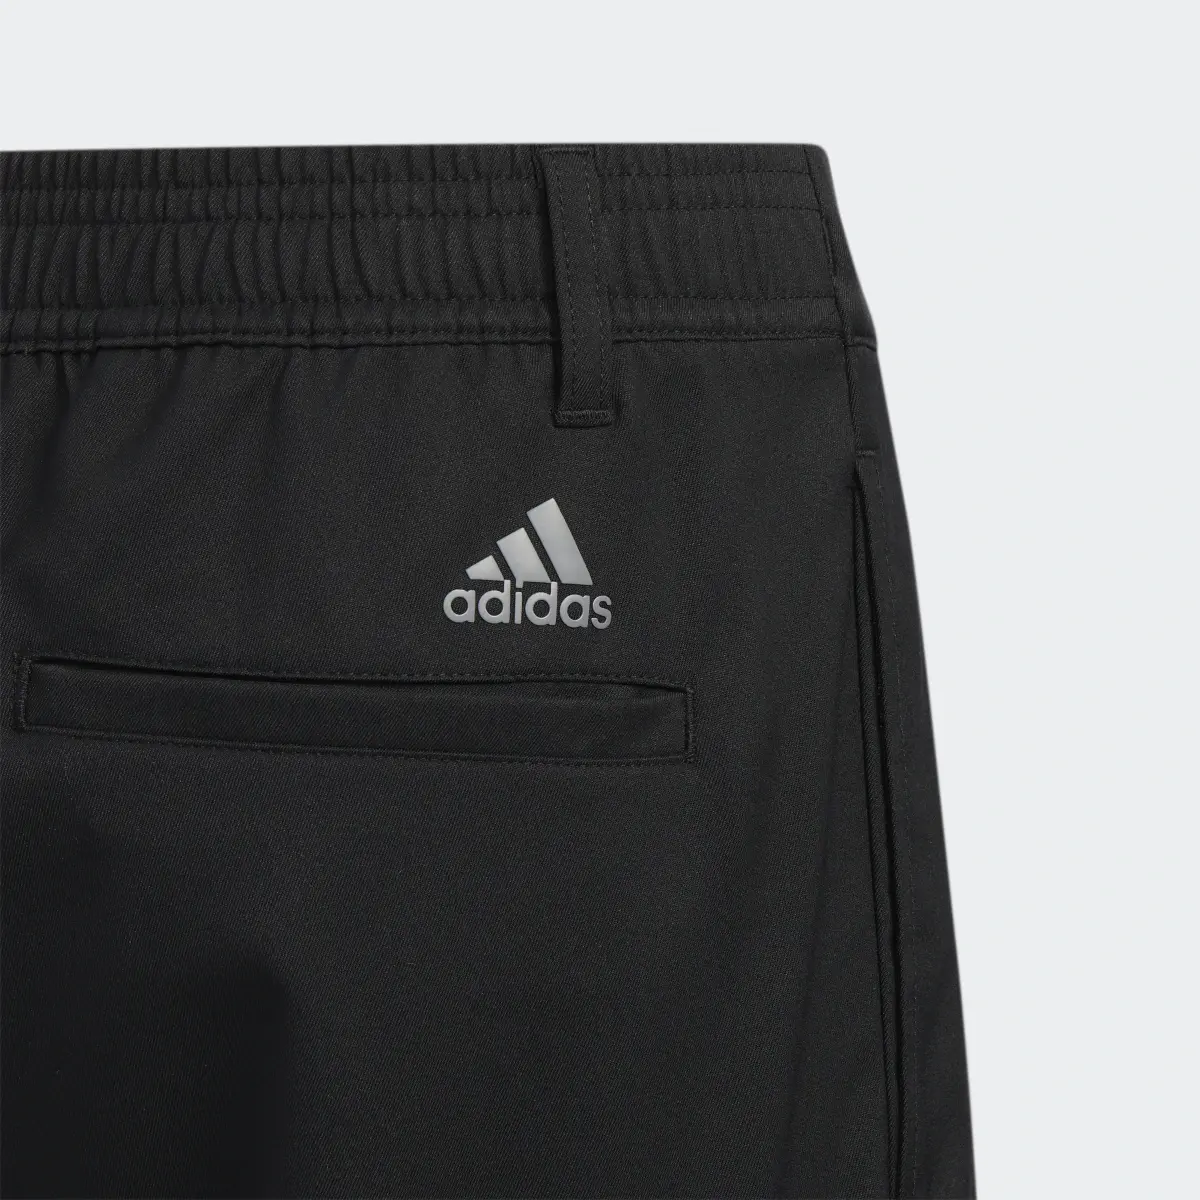 Adidas Ultimate365 Adjustable Golf Shorts. 3